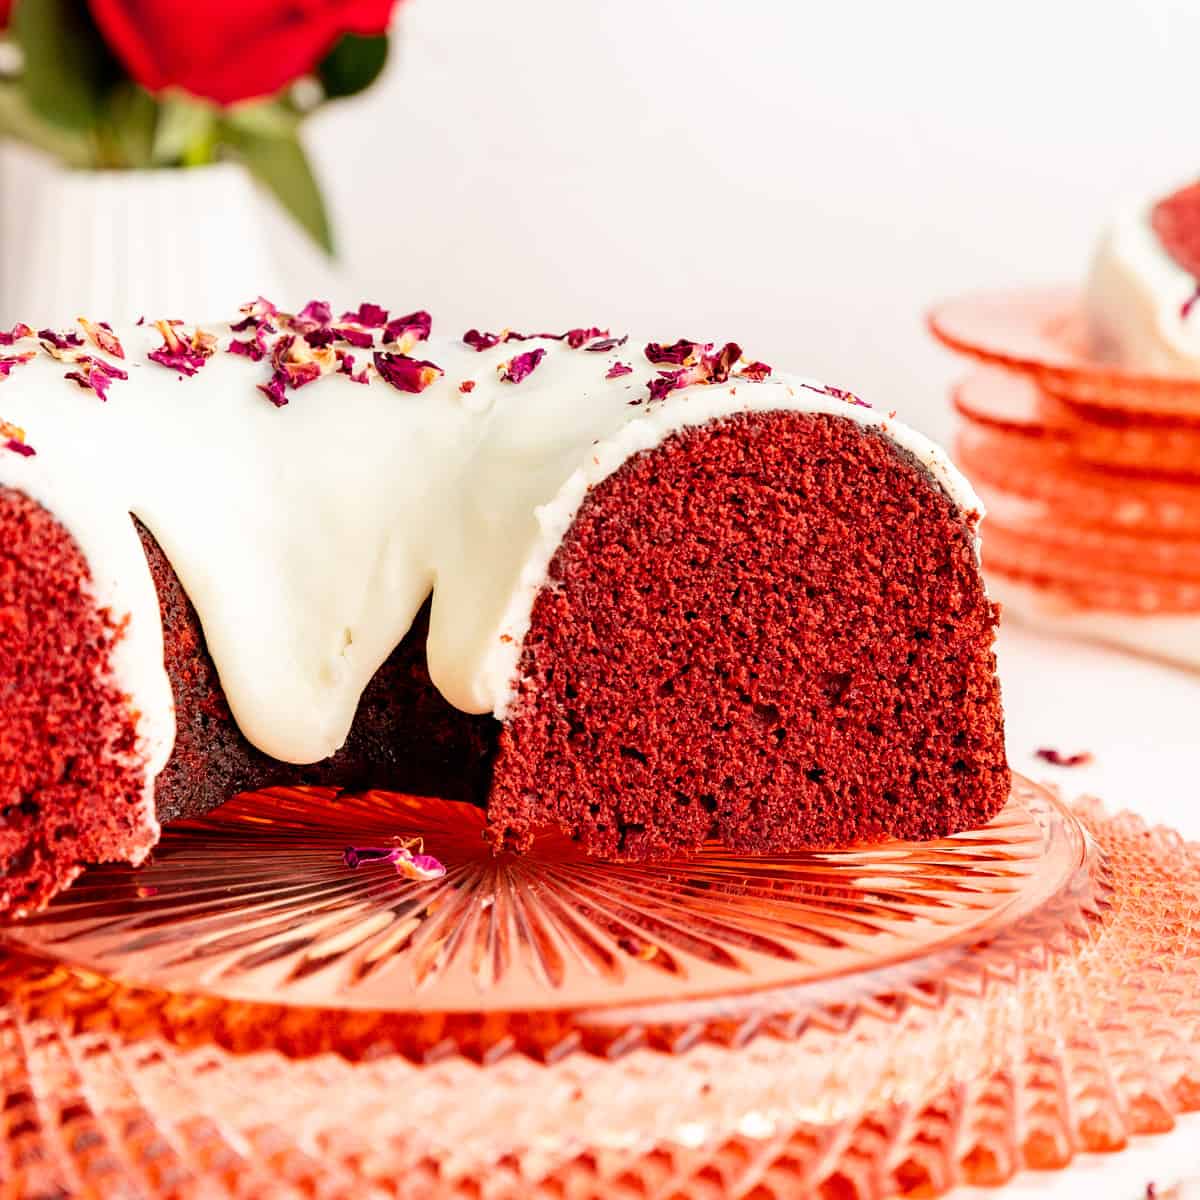 Mini Red Velvet Bundt Cakes with Cream Cheese Frosting - 7 Empty Plates